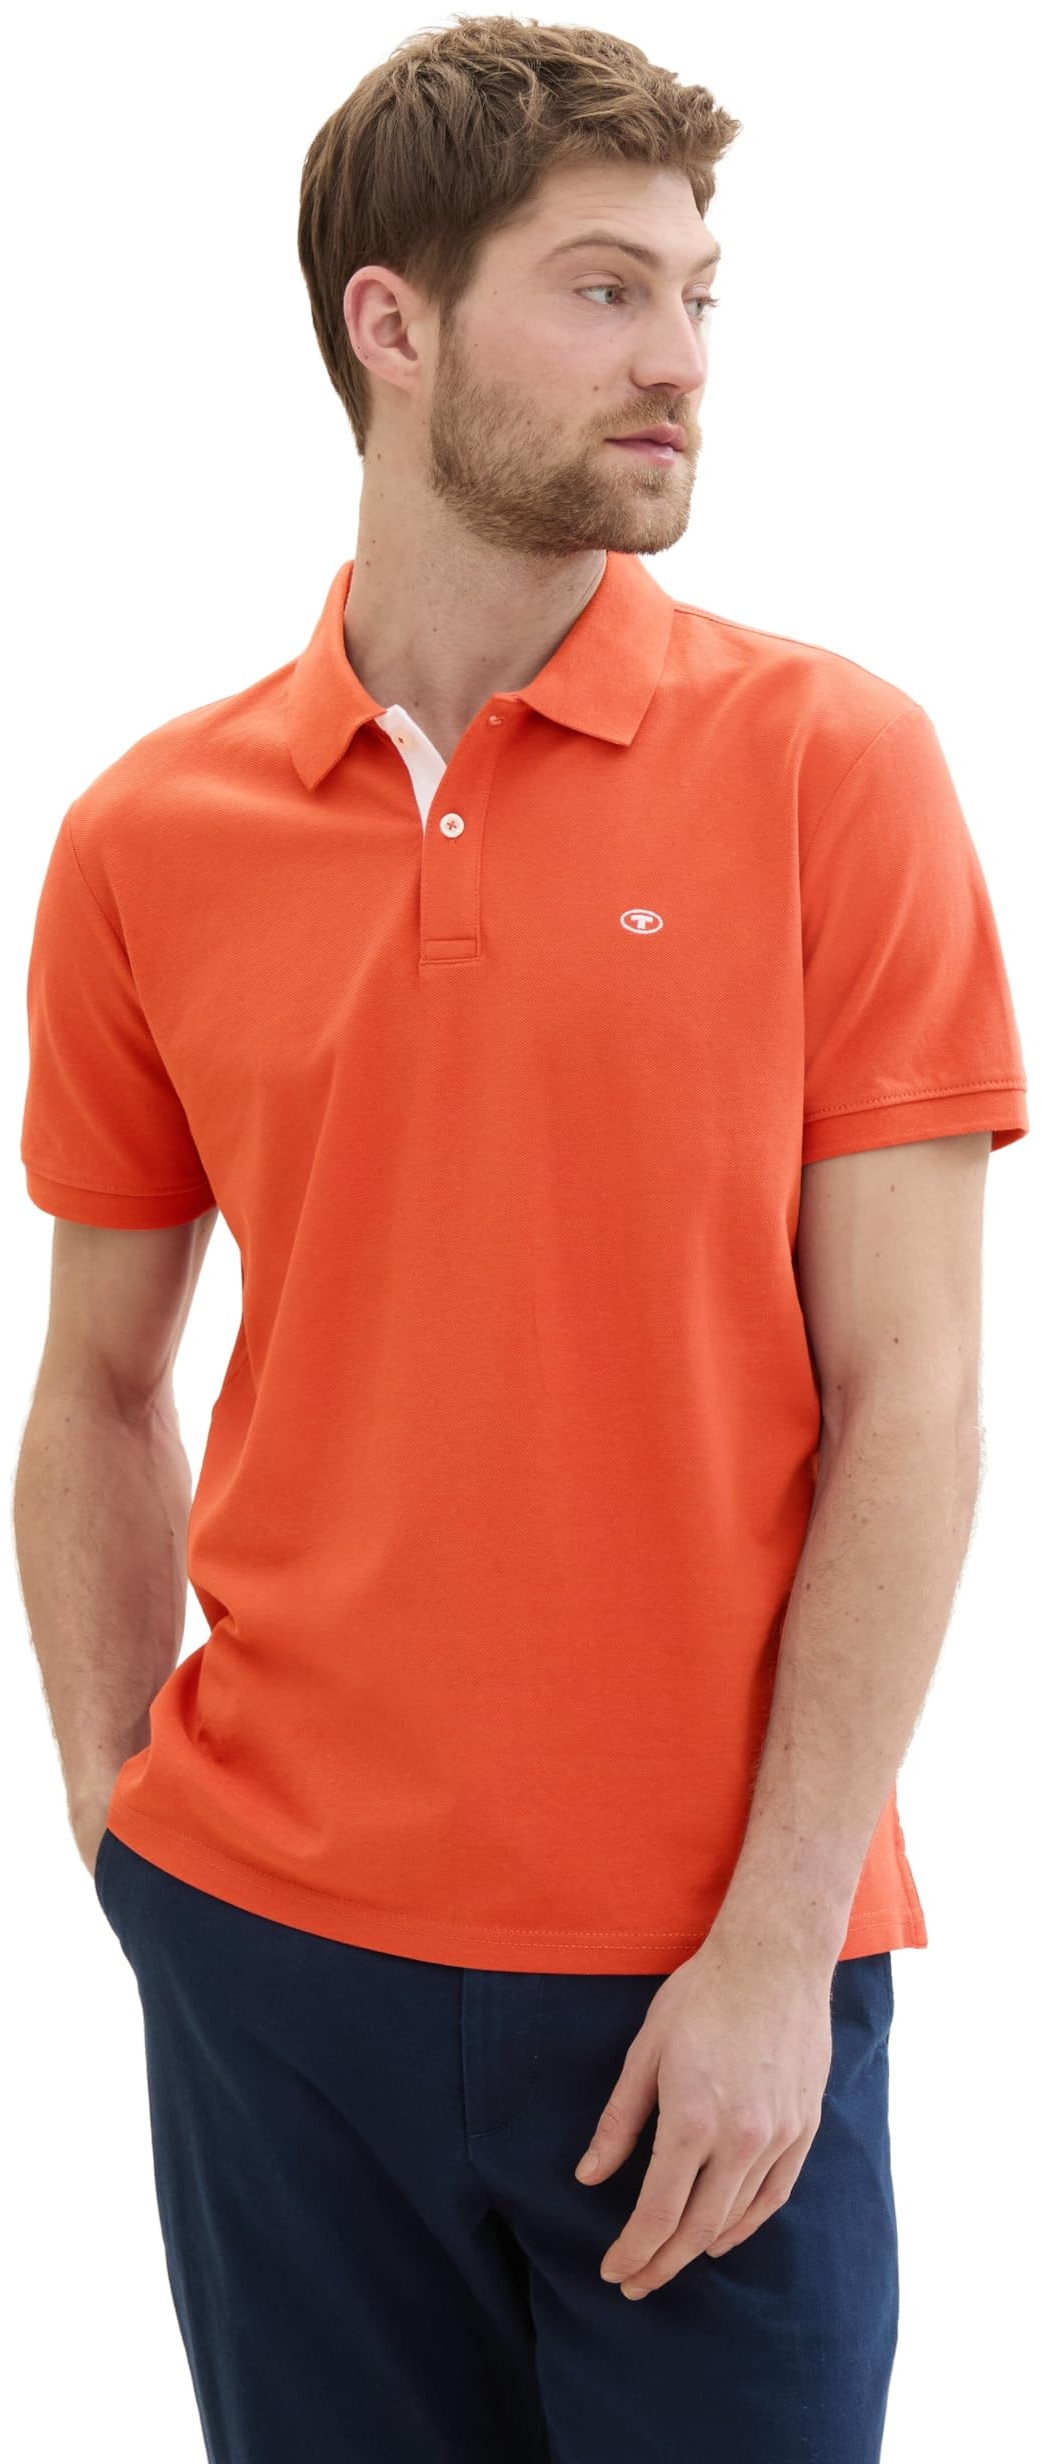 TOM TAILOR Herren Basic Piqué Poloshirt, marocco orange, XL